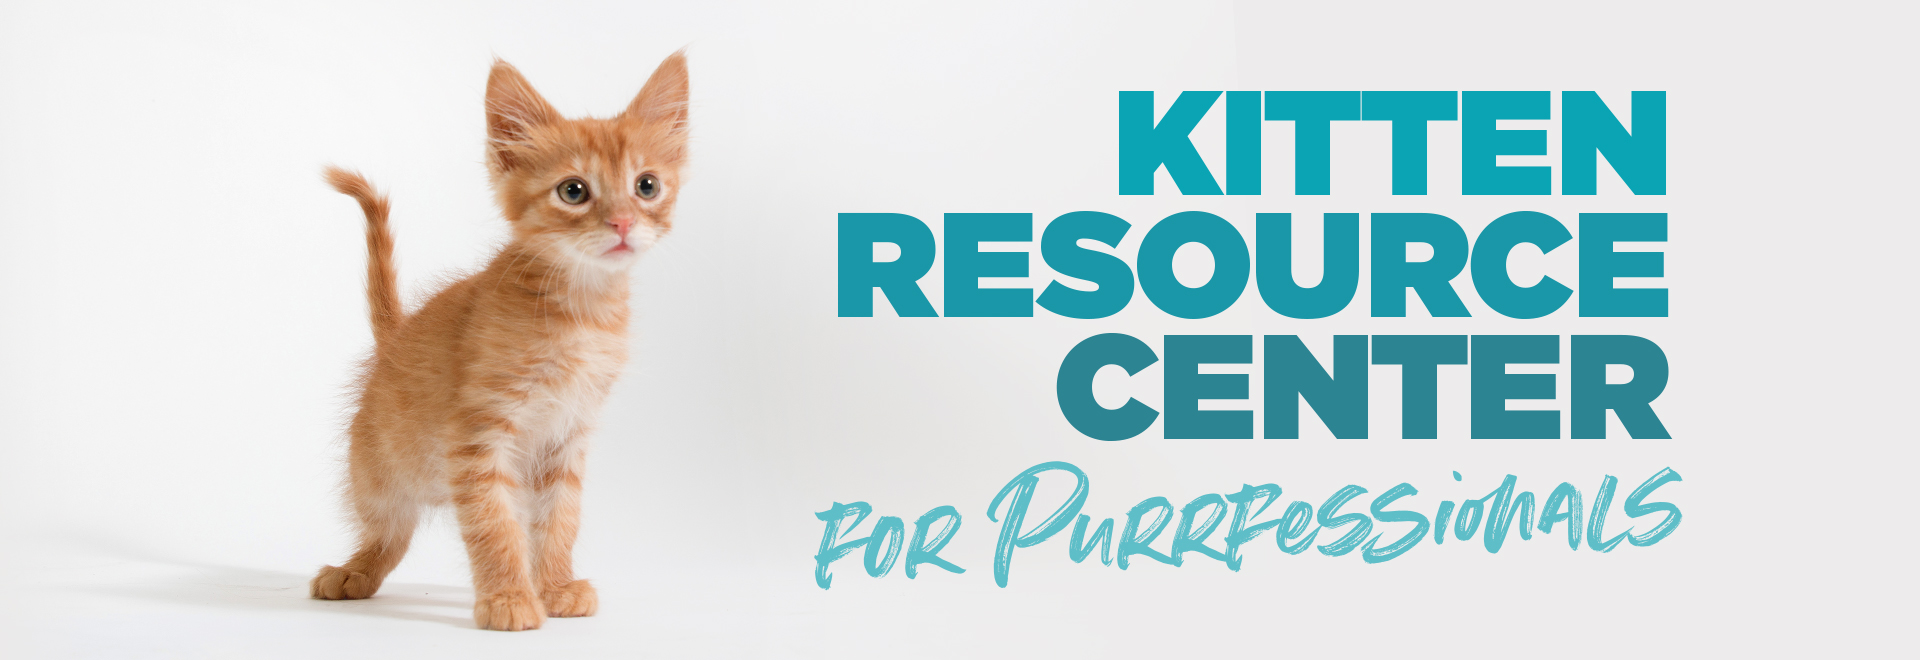 Kitten Resource Center for Purrfessionals